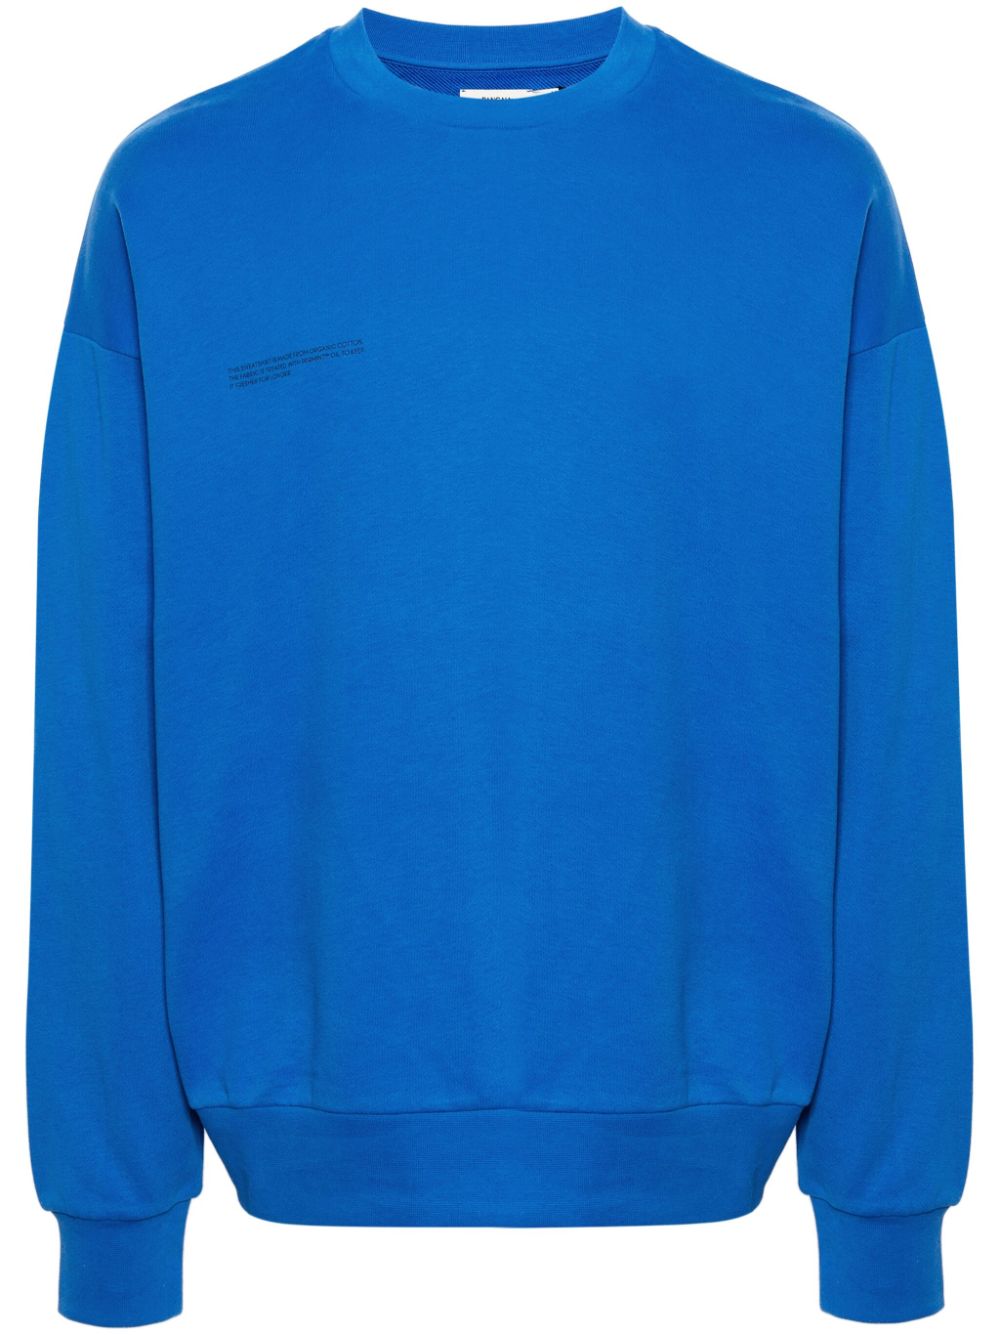 Pangaia 365 Midweight Sweatshirt aus Bio-Baumwolle - Blau von Pangaia